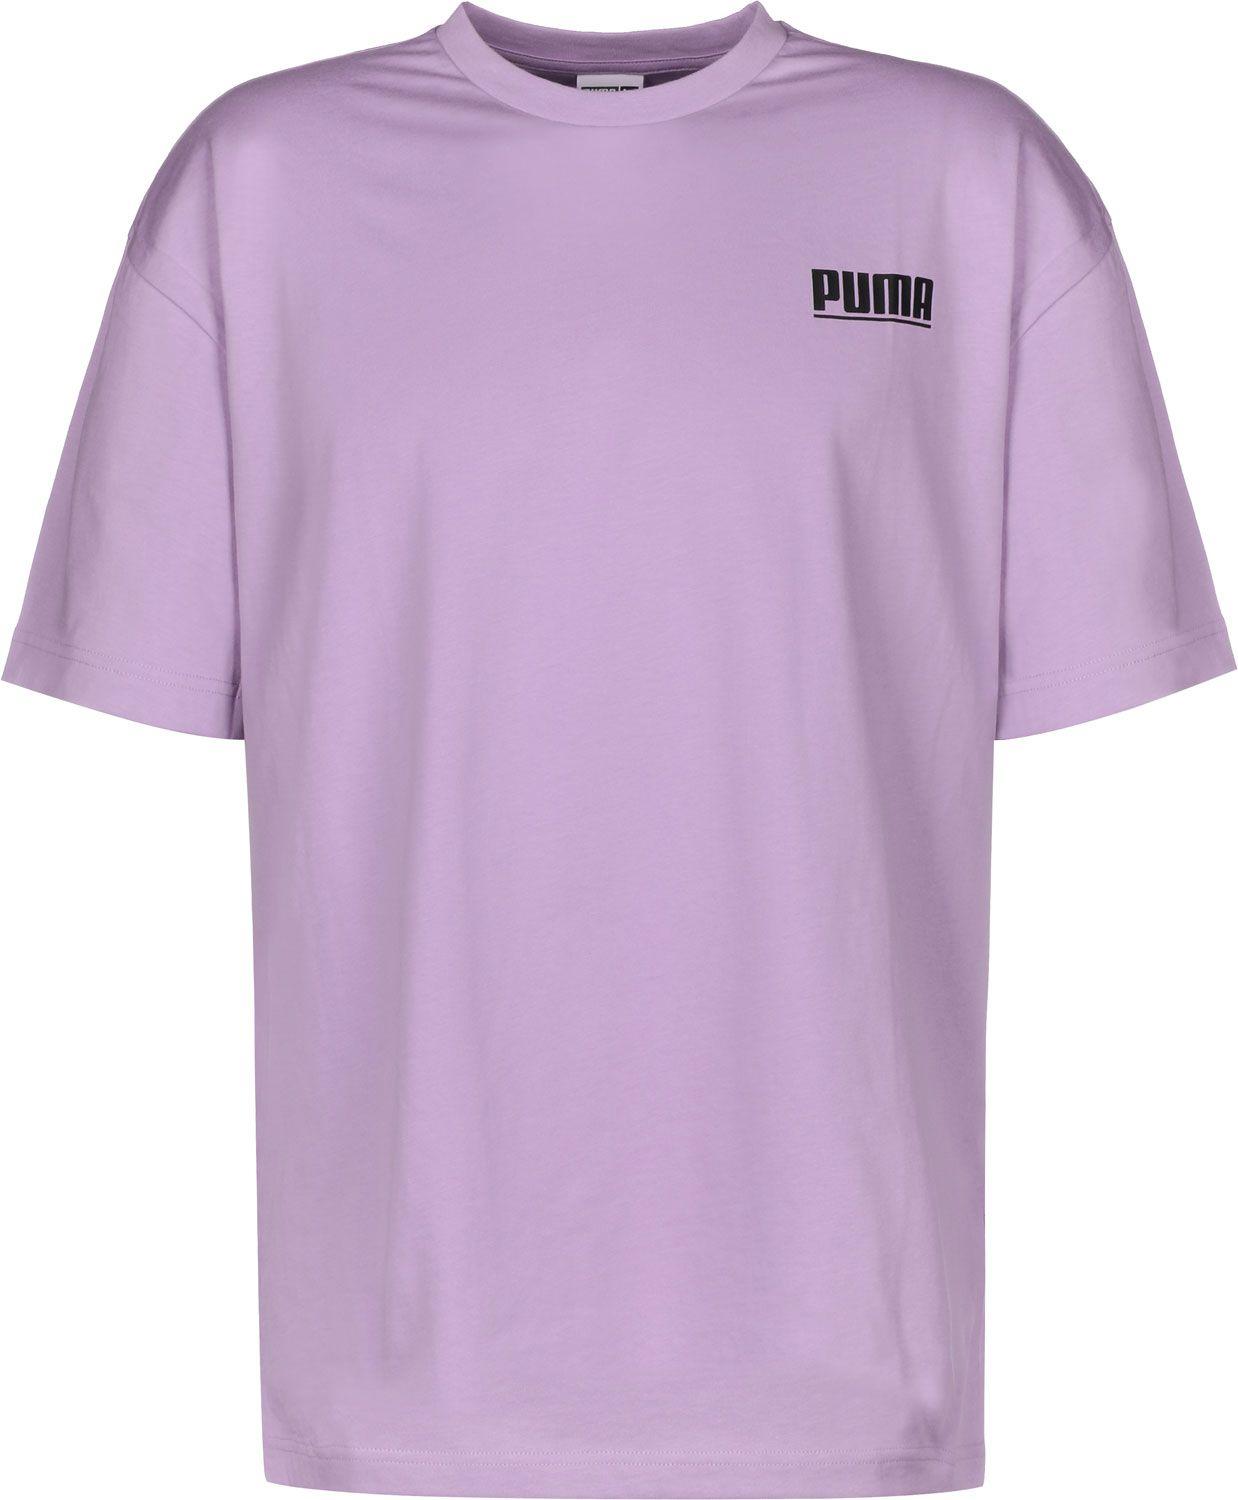 Purple Puma Logo - Puma Logo Tower T-shirt purple | WeAre Shop